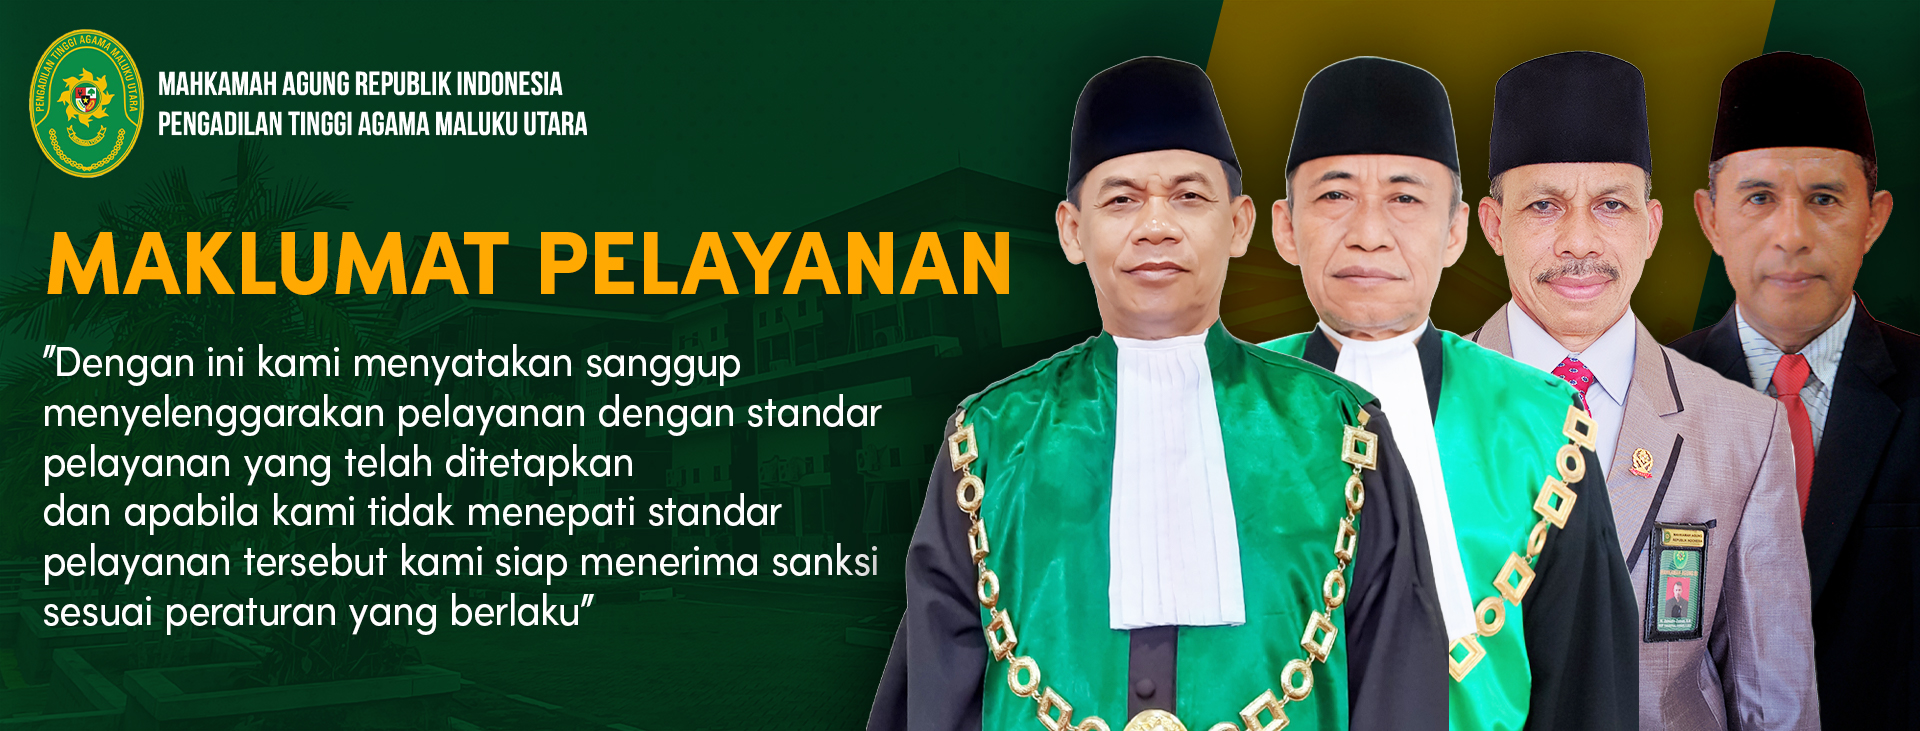 Banner Maklumat Pelayanan new